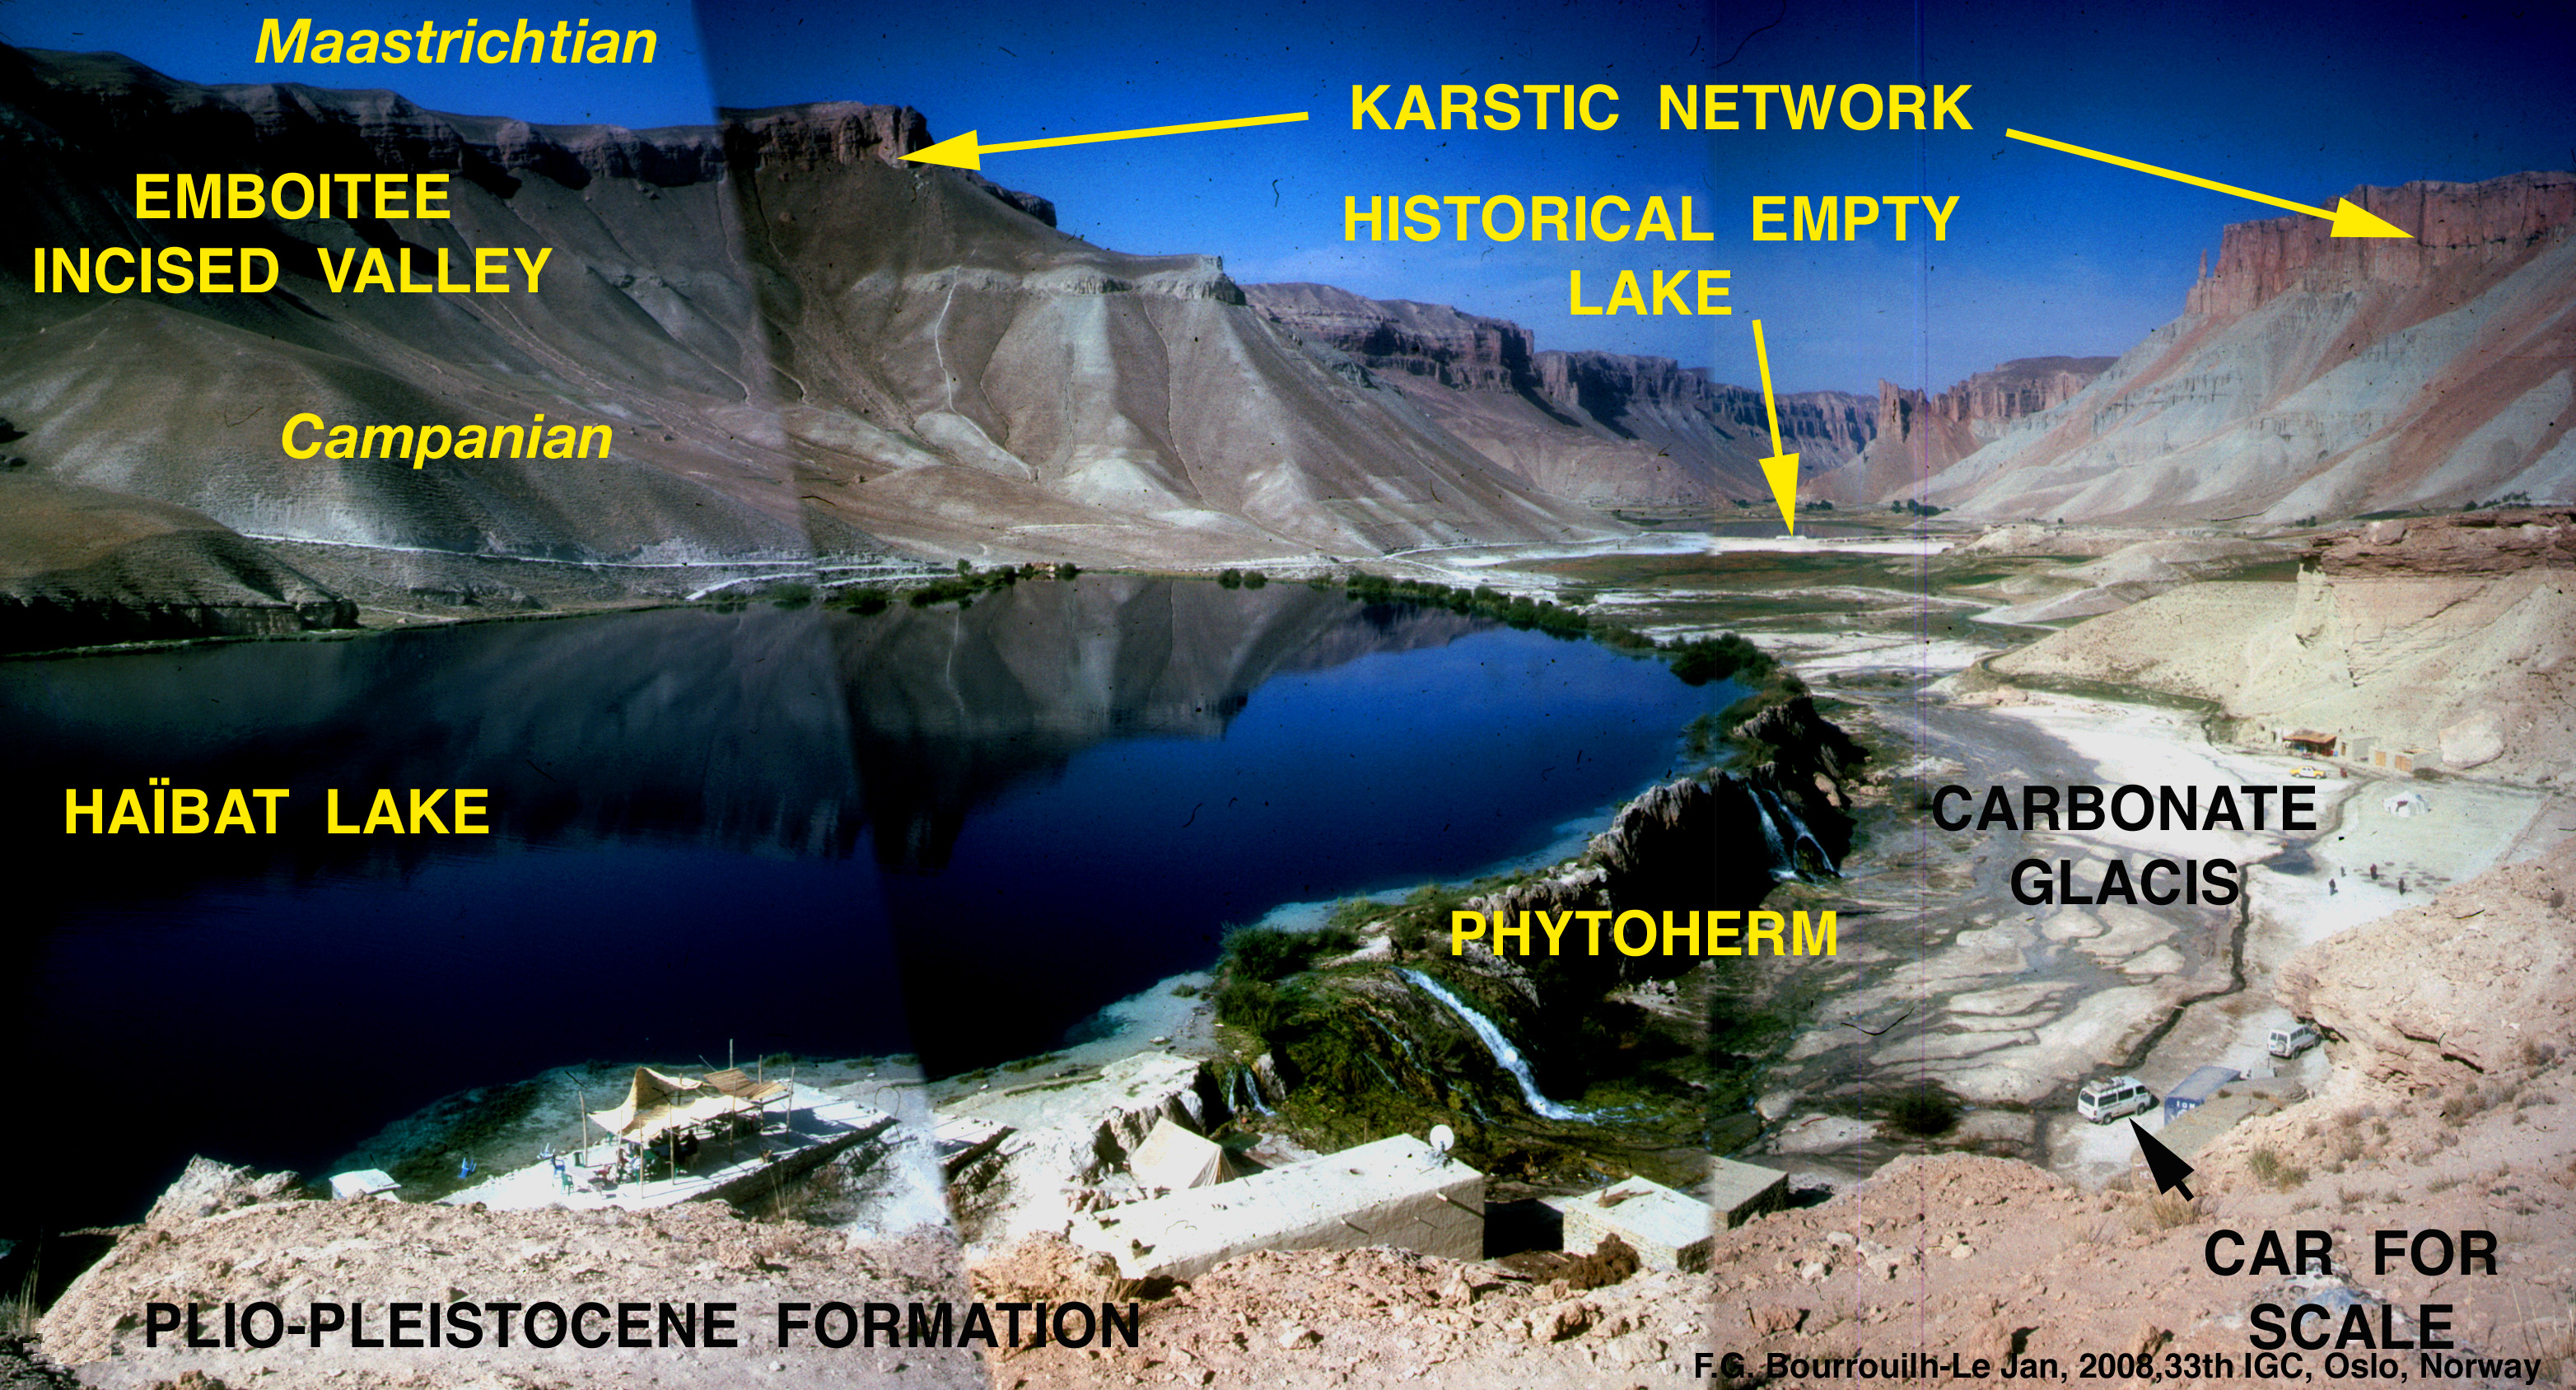 Band-e-Amir lakes phytoherms